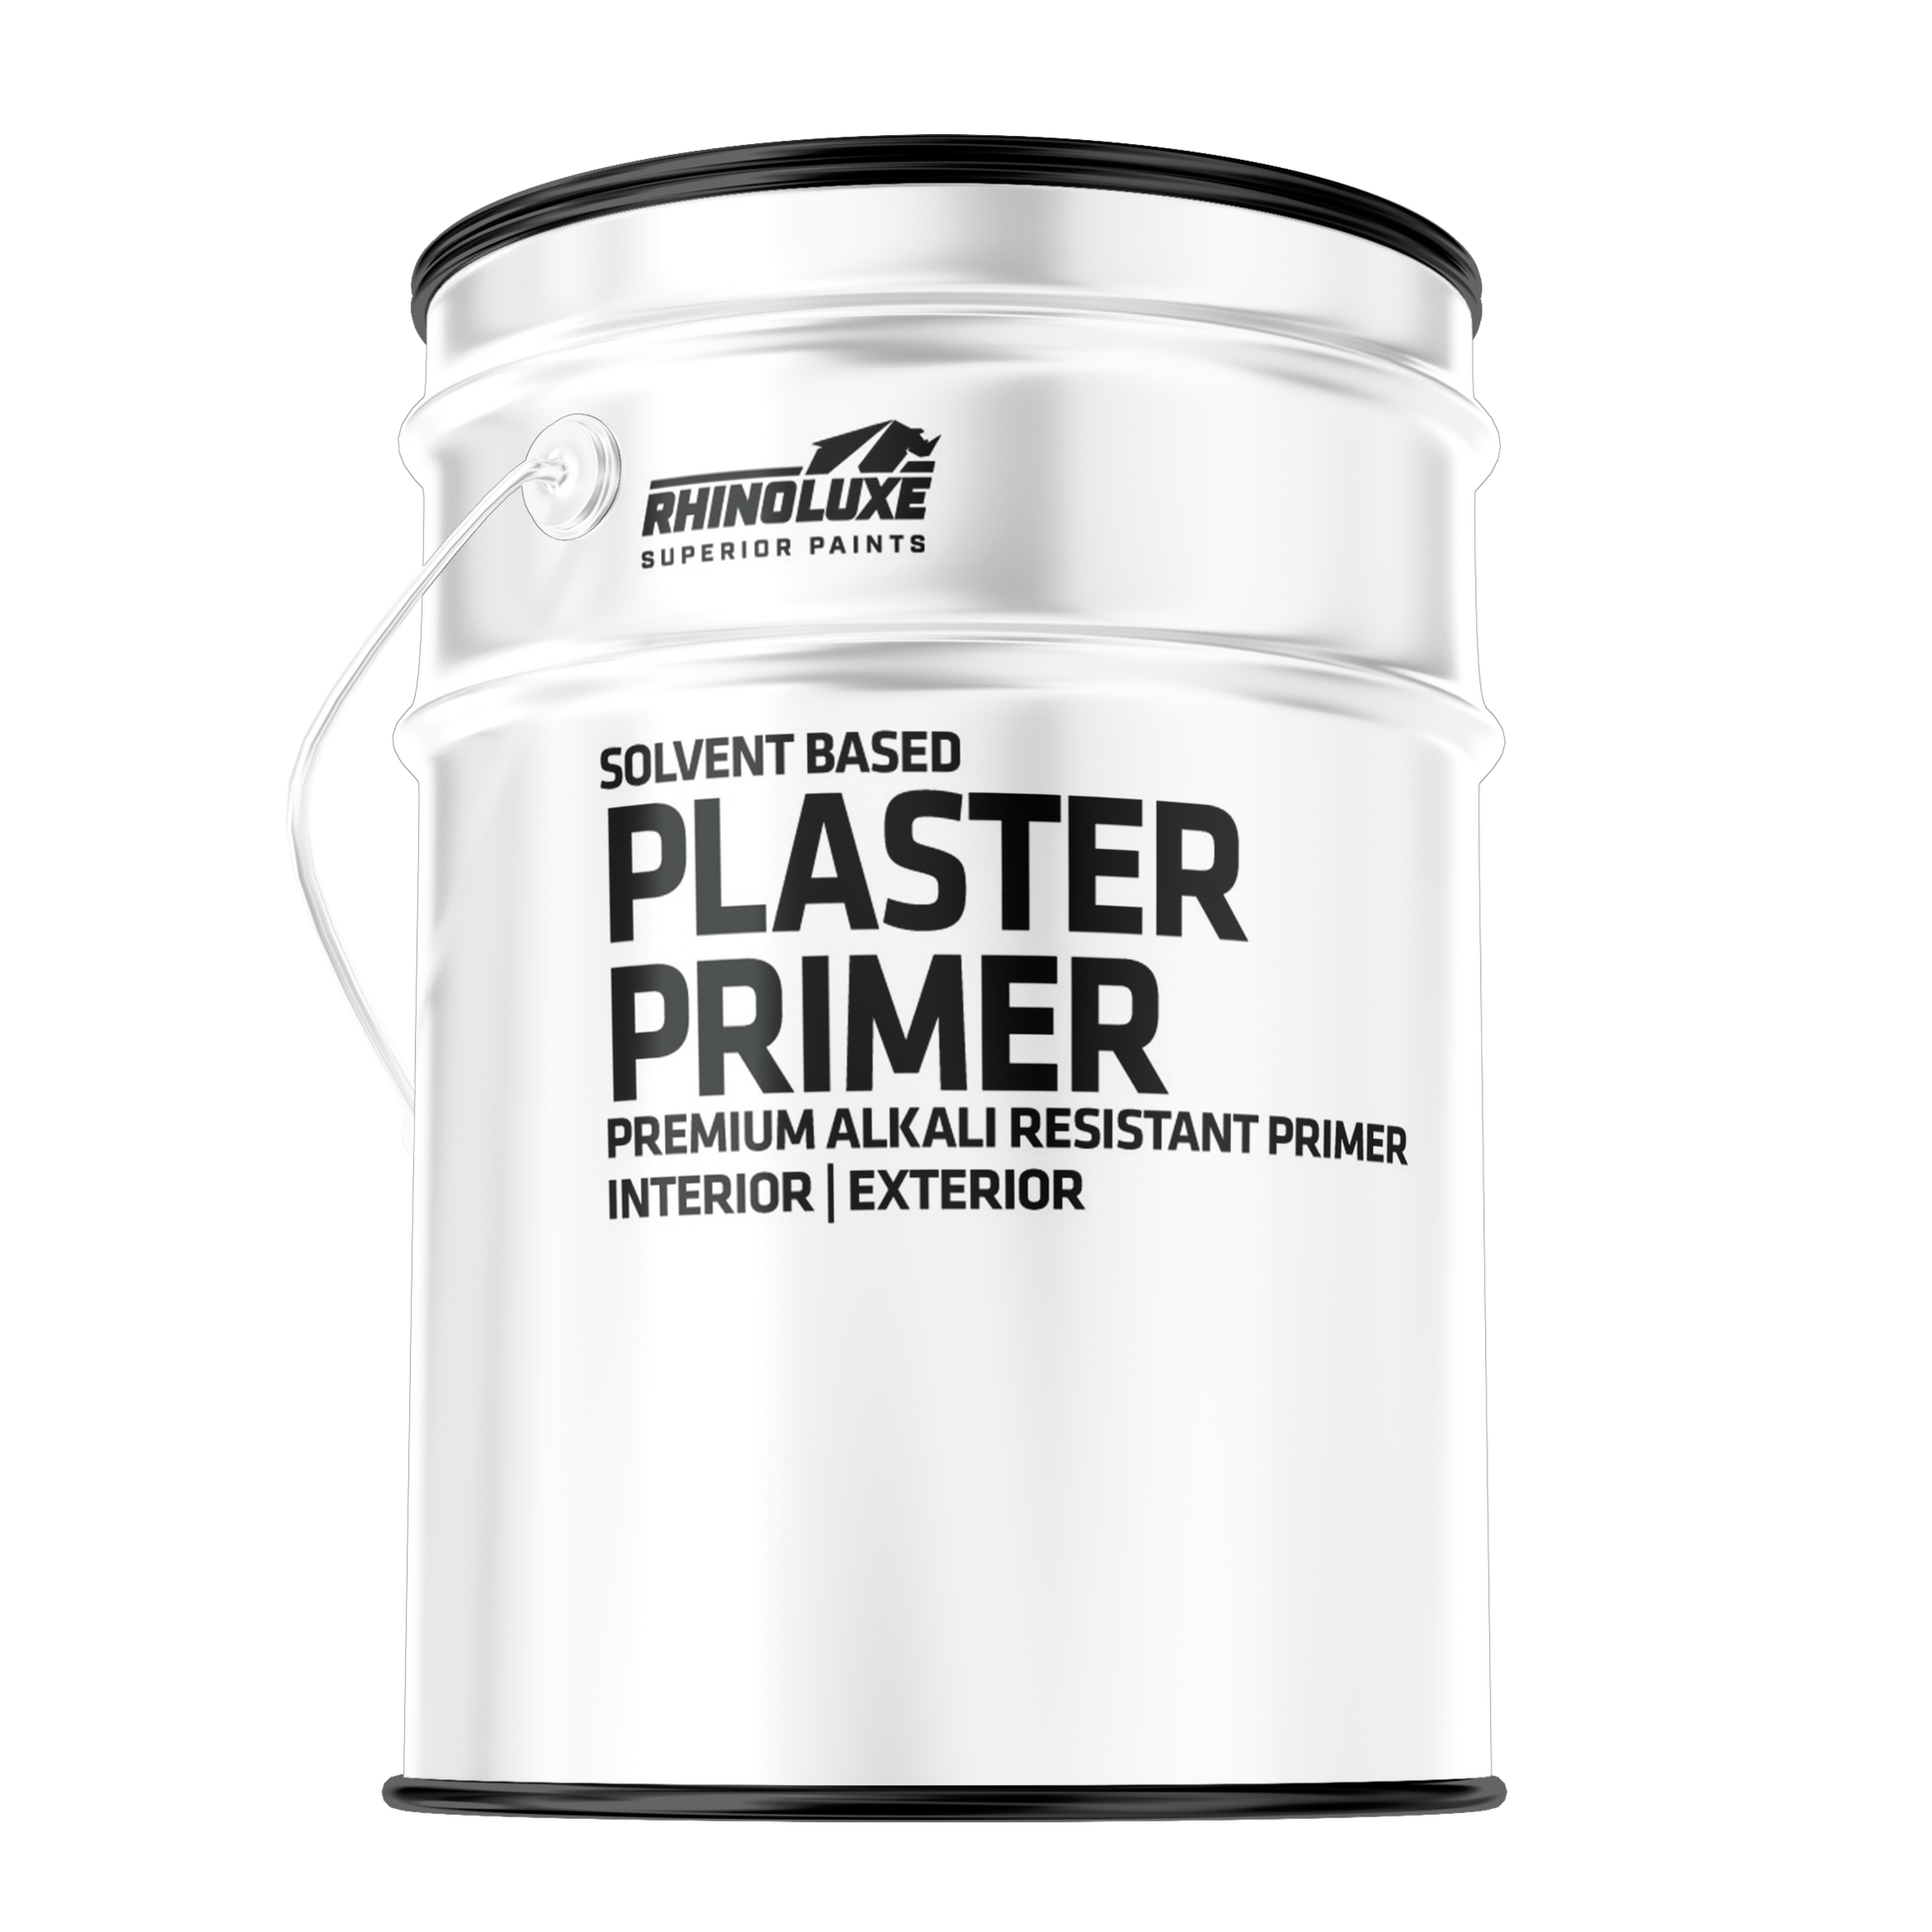 Solvent Based Plaster Primer Premium Alkali Resistant Primer for Interior and Exterior